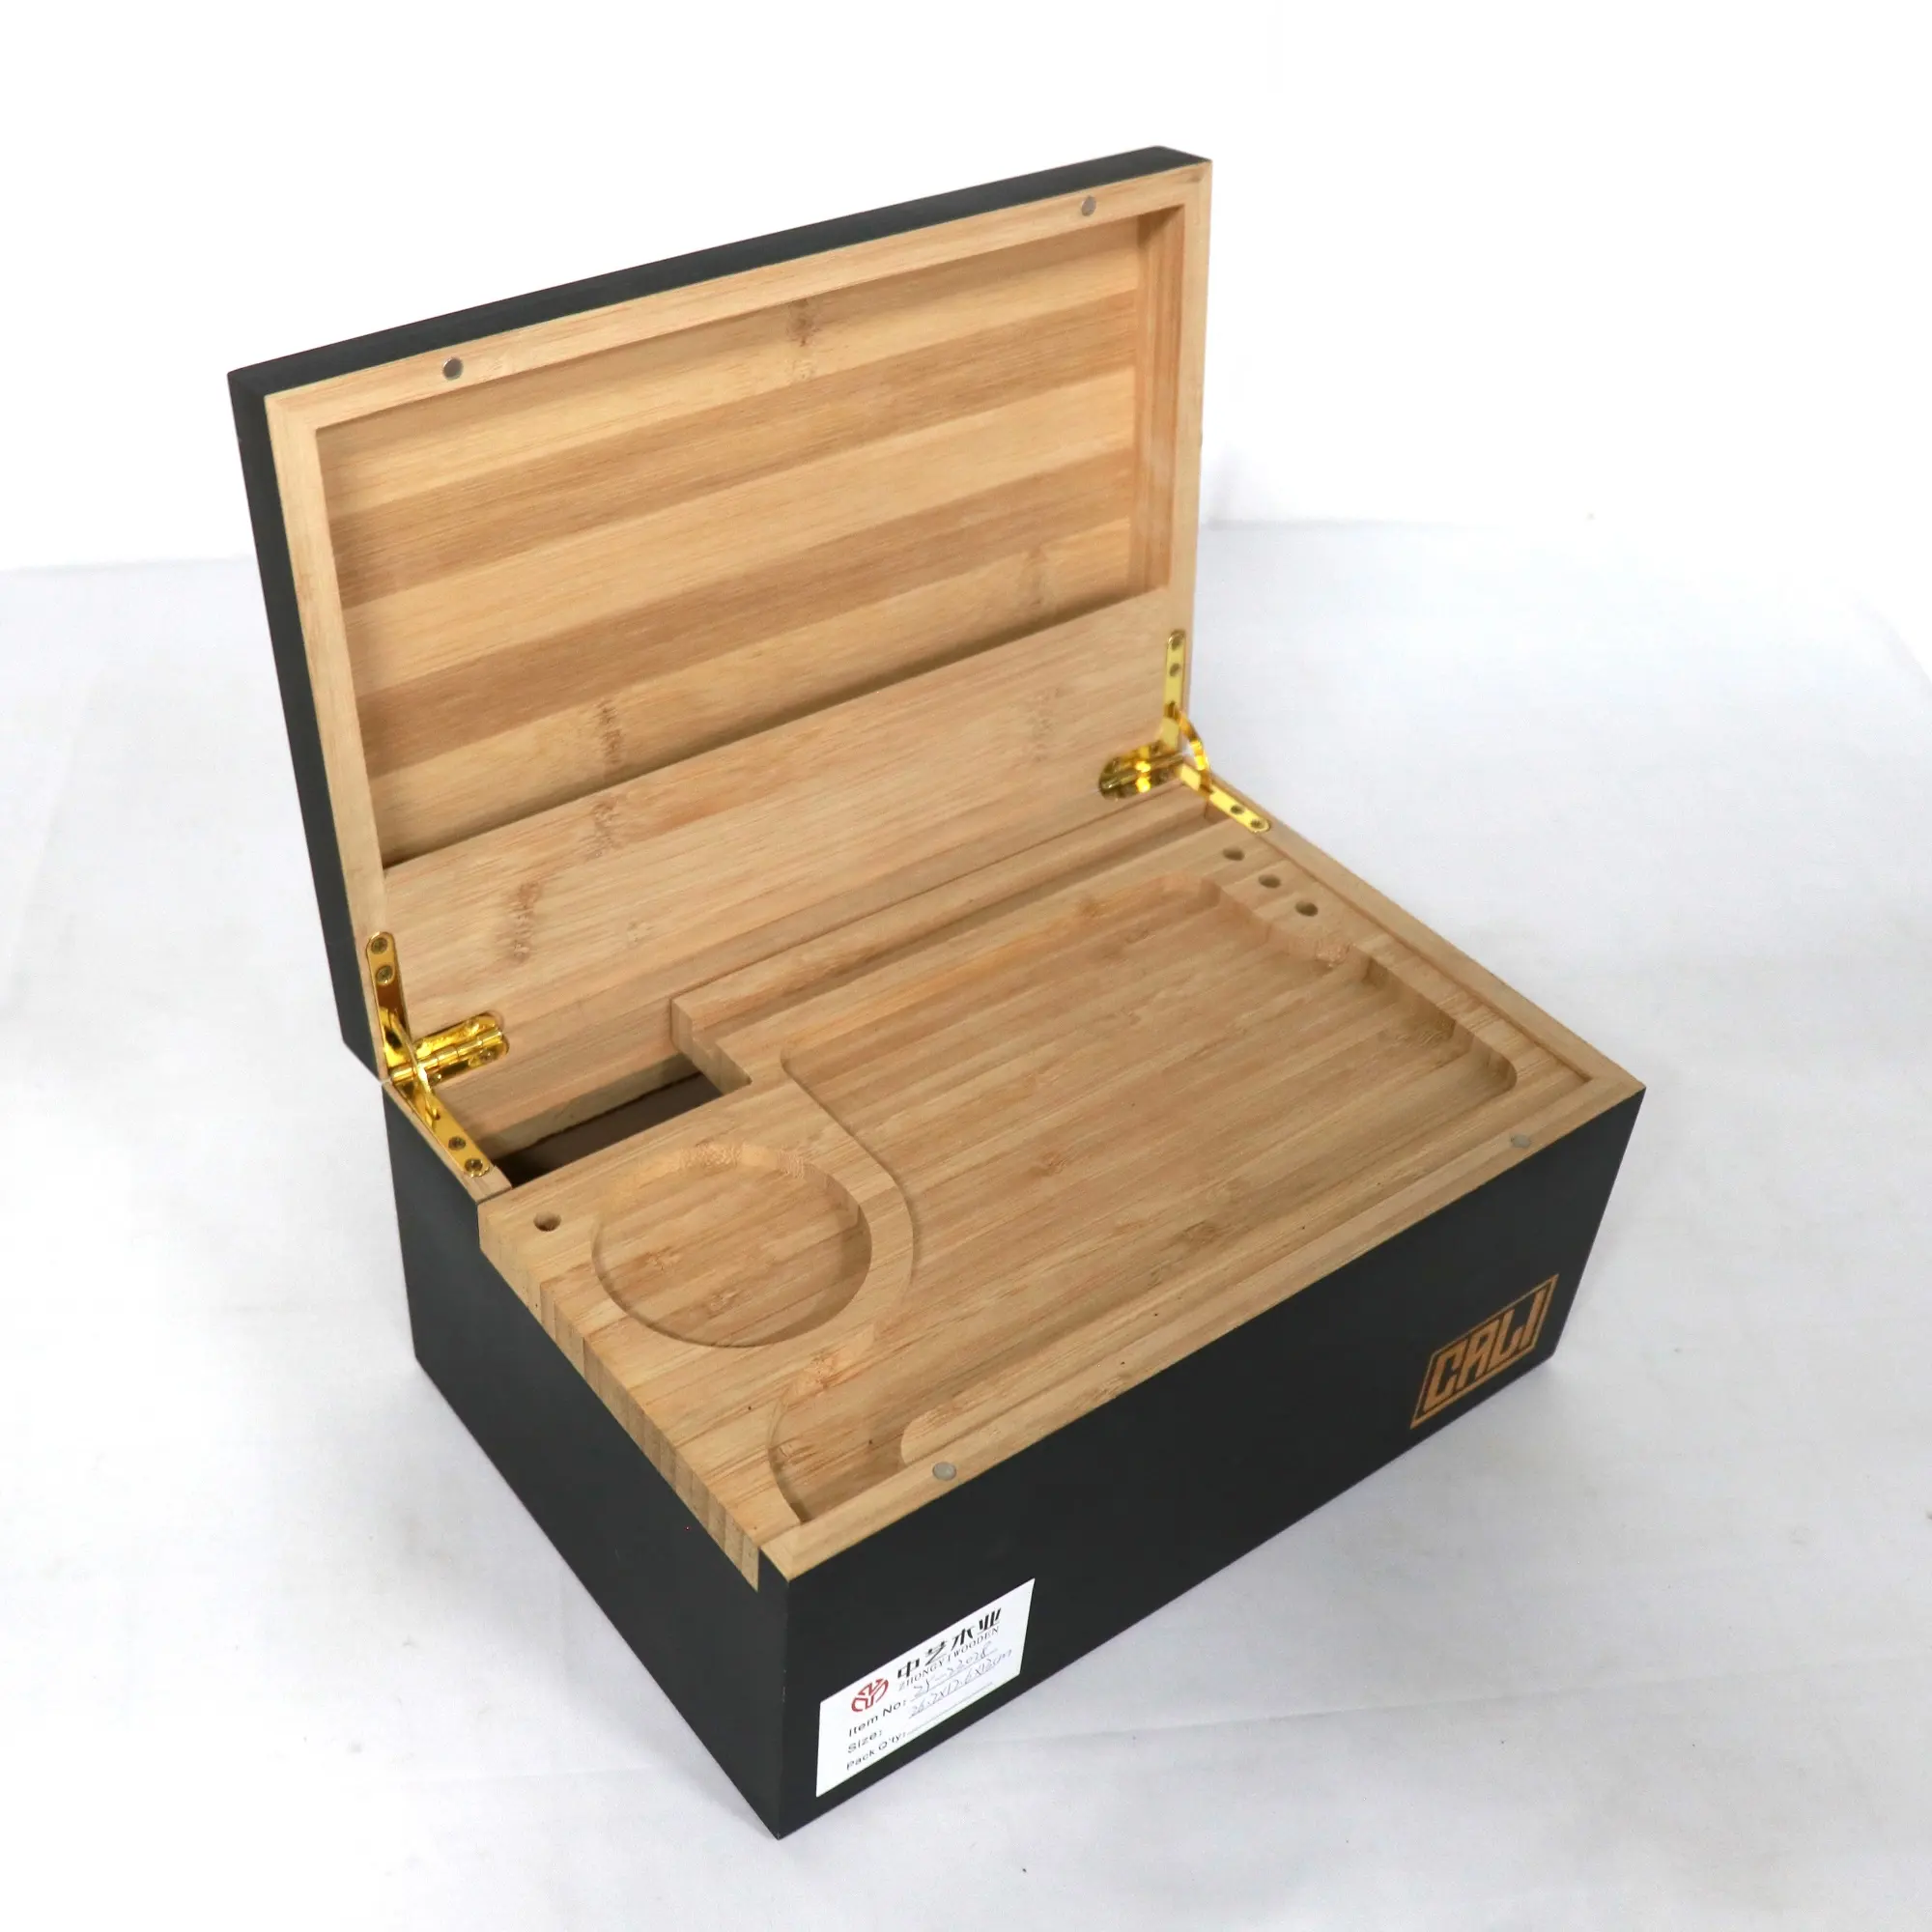 OEM装飾木製高級スタッシュボックス喫煙竹スタッシュボックスローリングトレイ付き木製ボックスヒンジ付き蓋付き